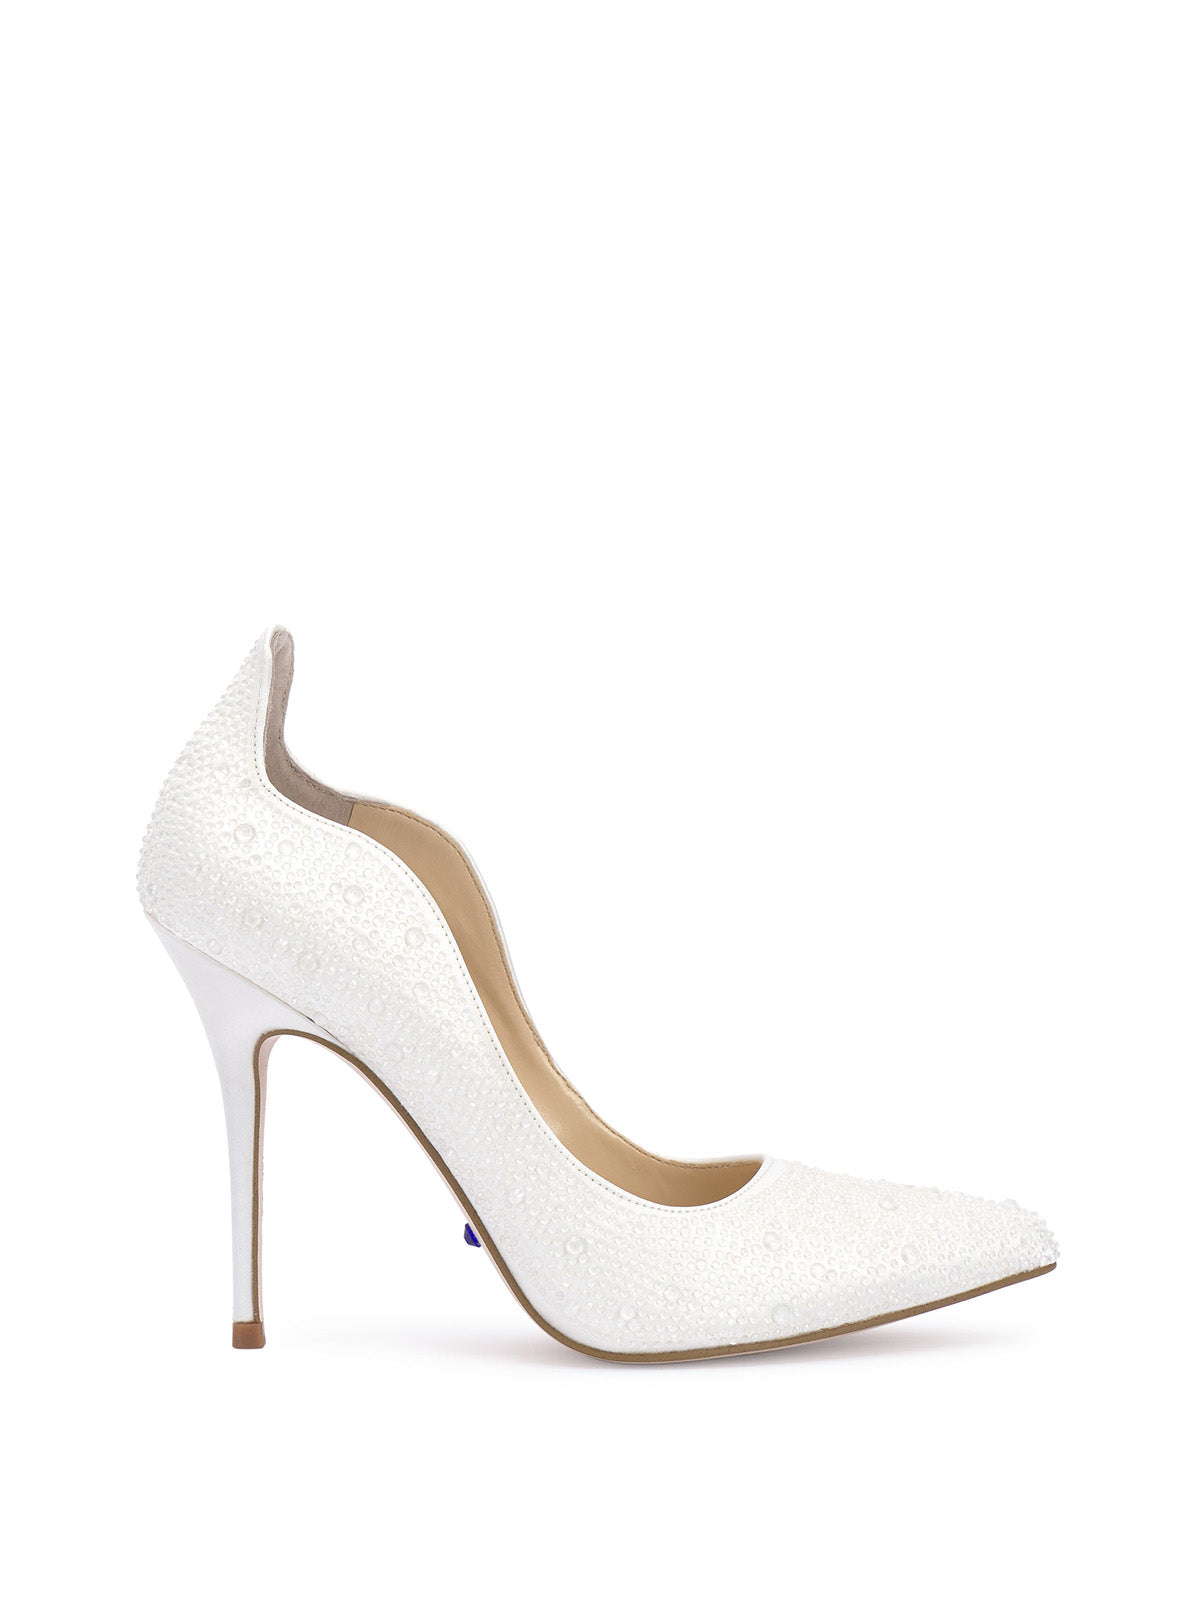 Take Care Extreme Platform Pumps - White | White pumps heels, Fashion nova  shoes, White pumps